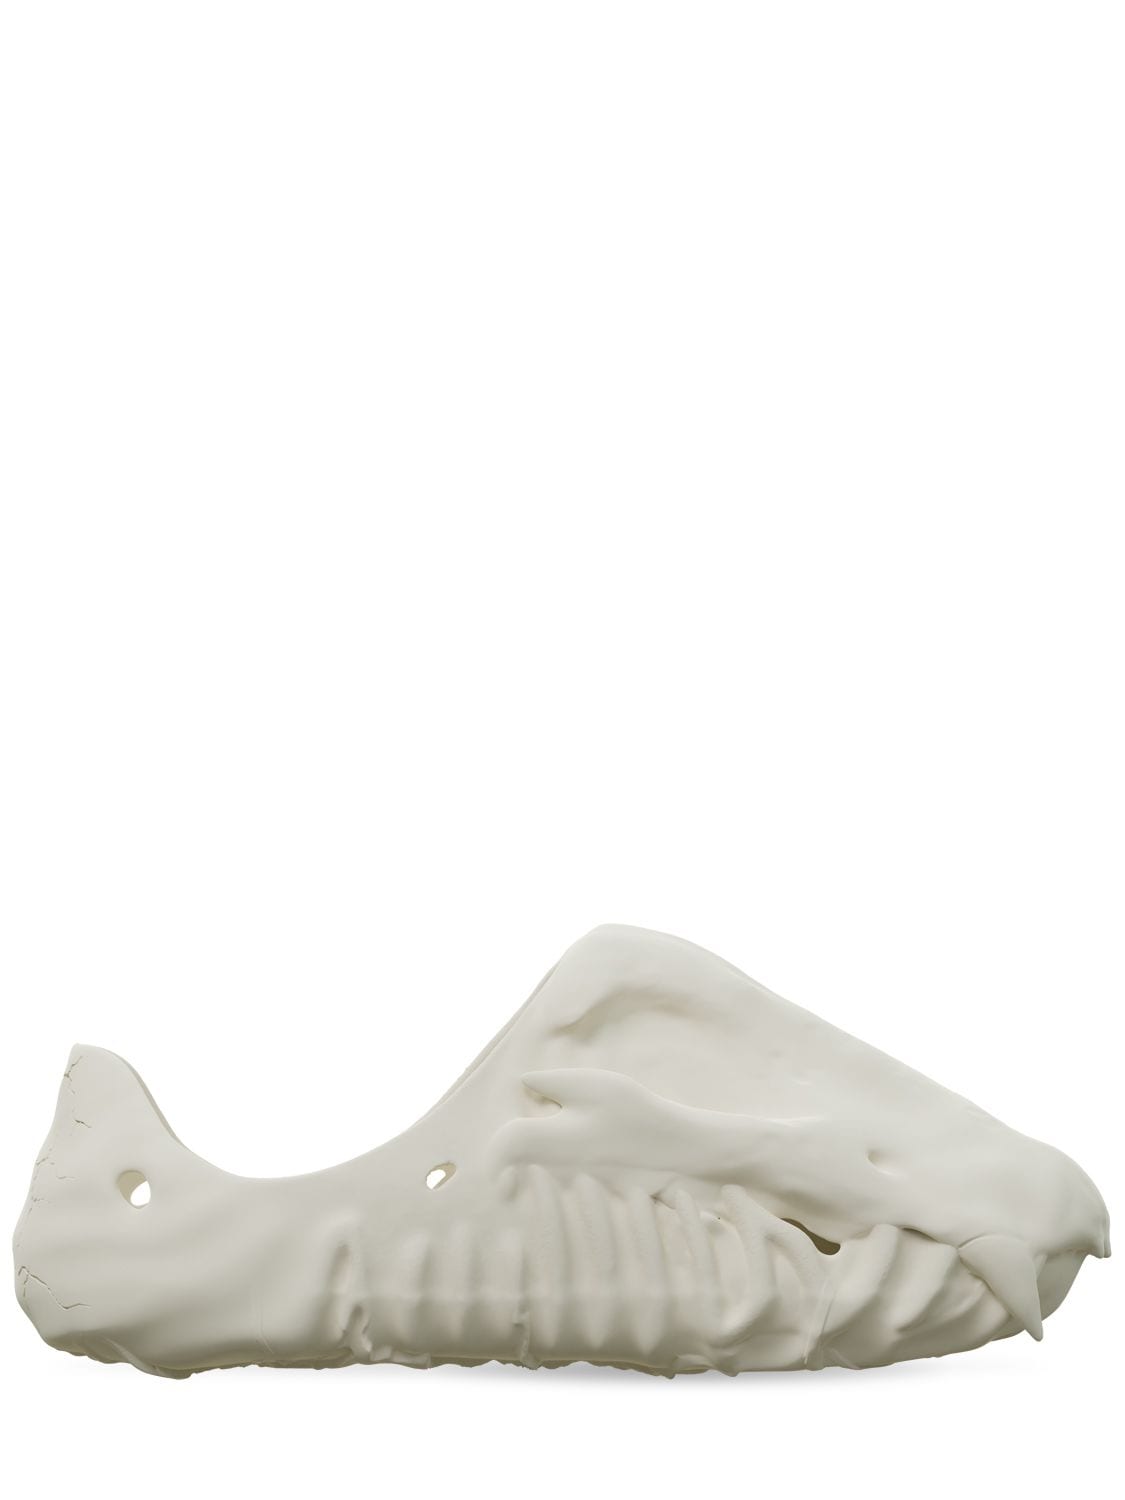 Kito Wares Fossil X Jaguar Jag Foam Runner运动鞋 In White